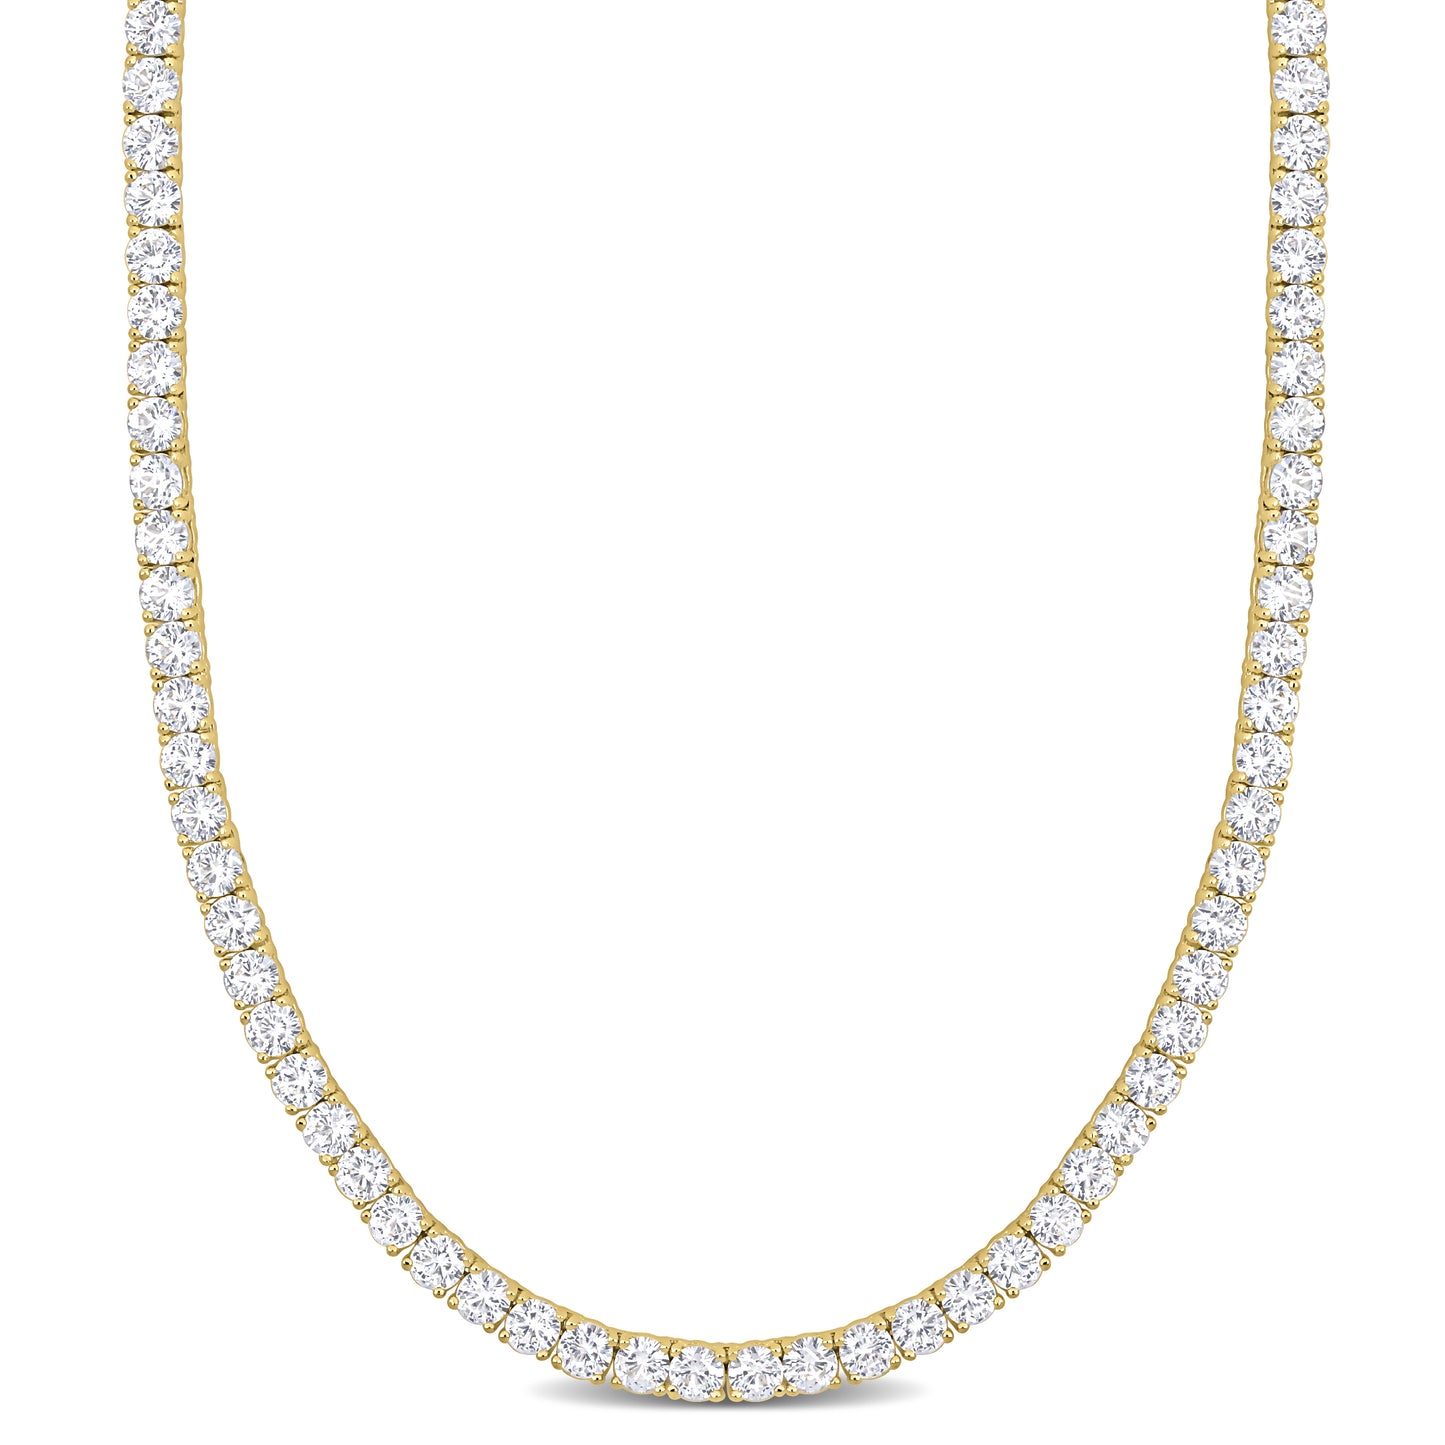 32 CT White Sapphire Tennis Necklace